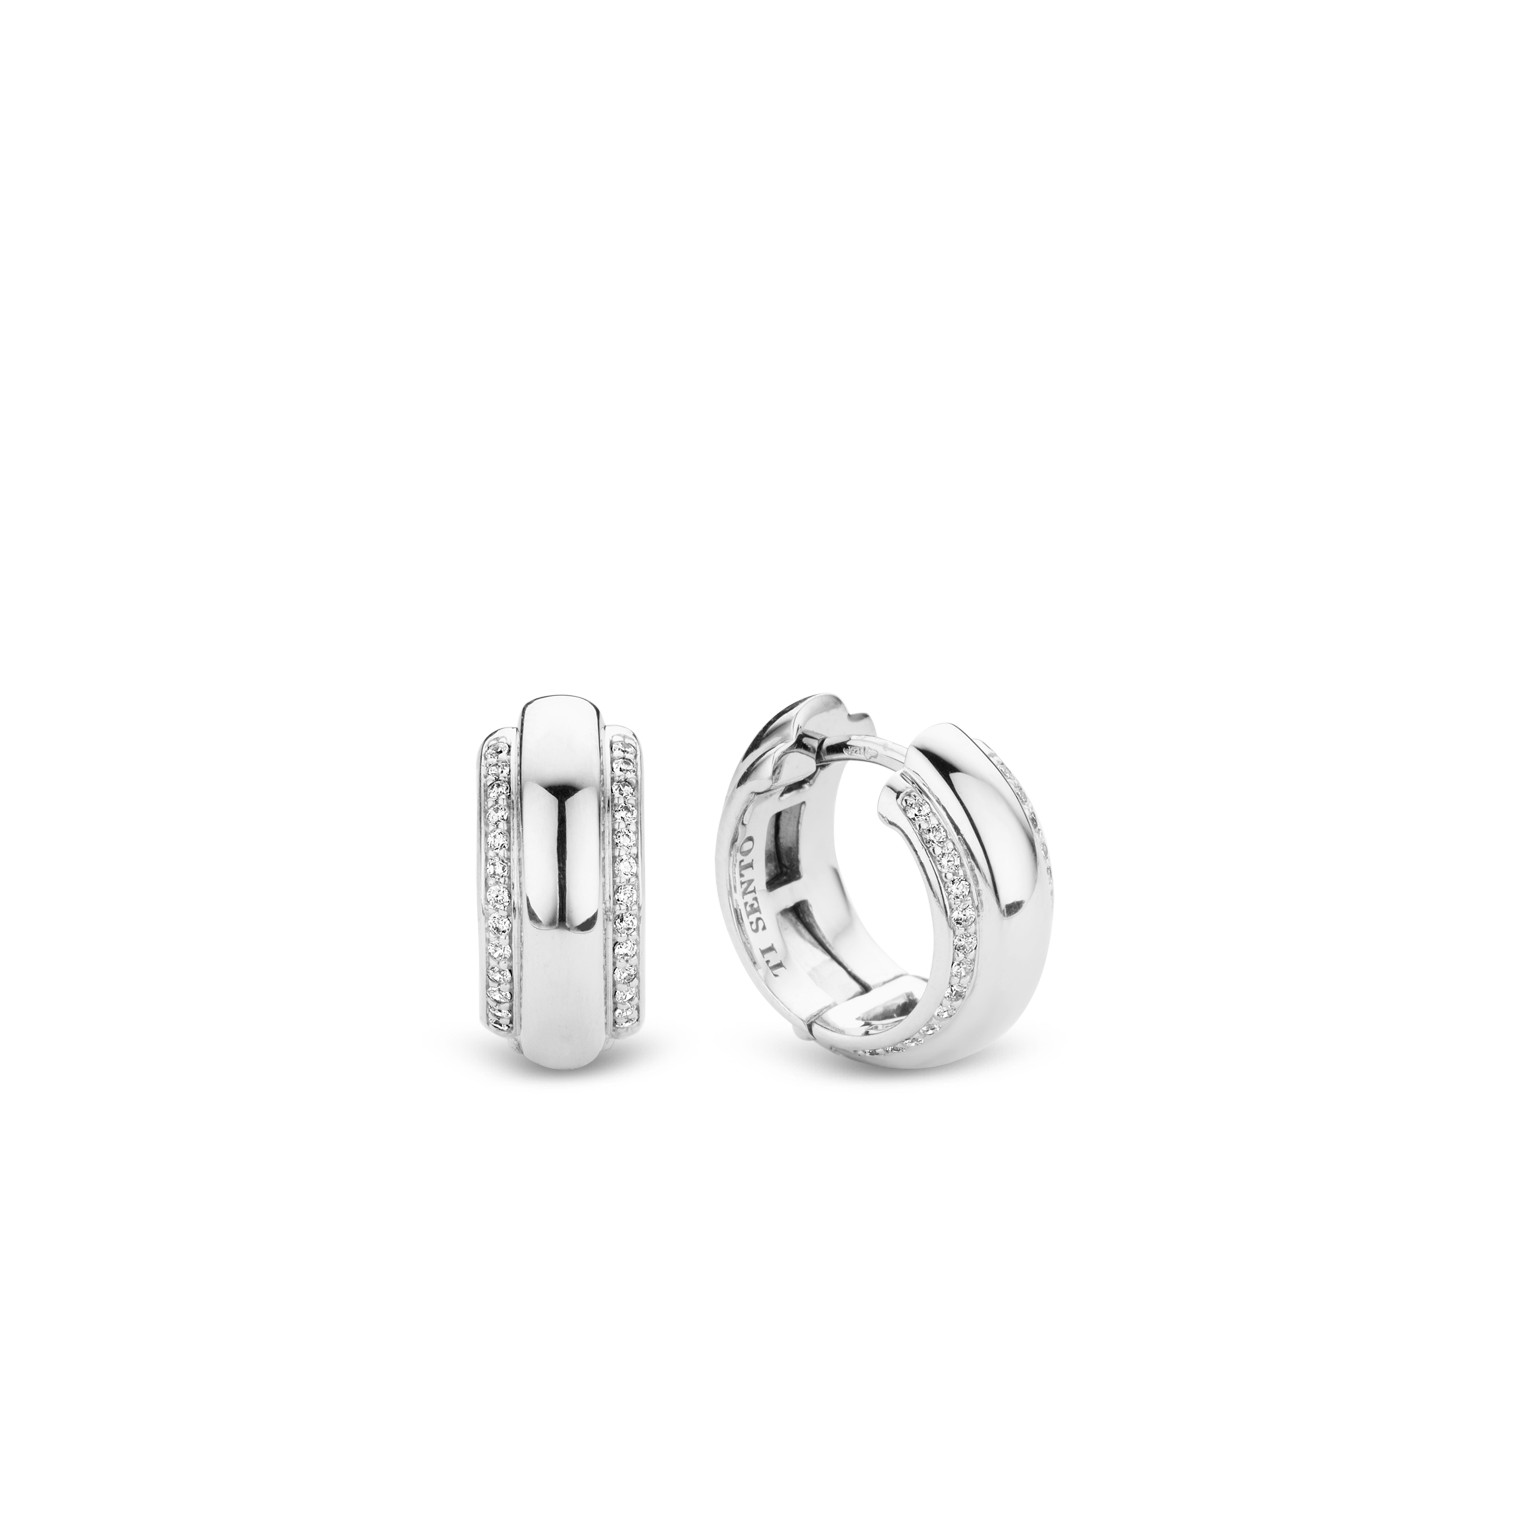 TI SENTO - Milano Earrings 7785ZI Gala Jewelers Inc. White Oak, PA